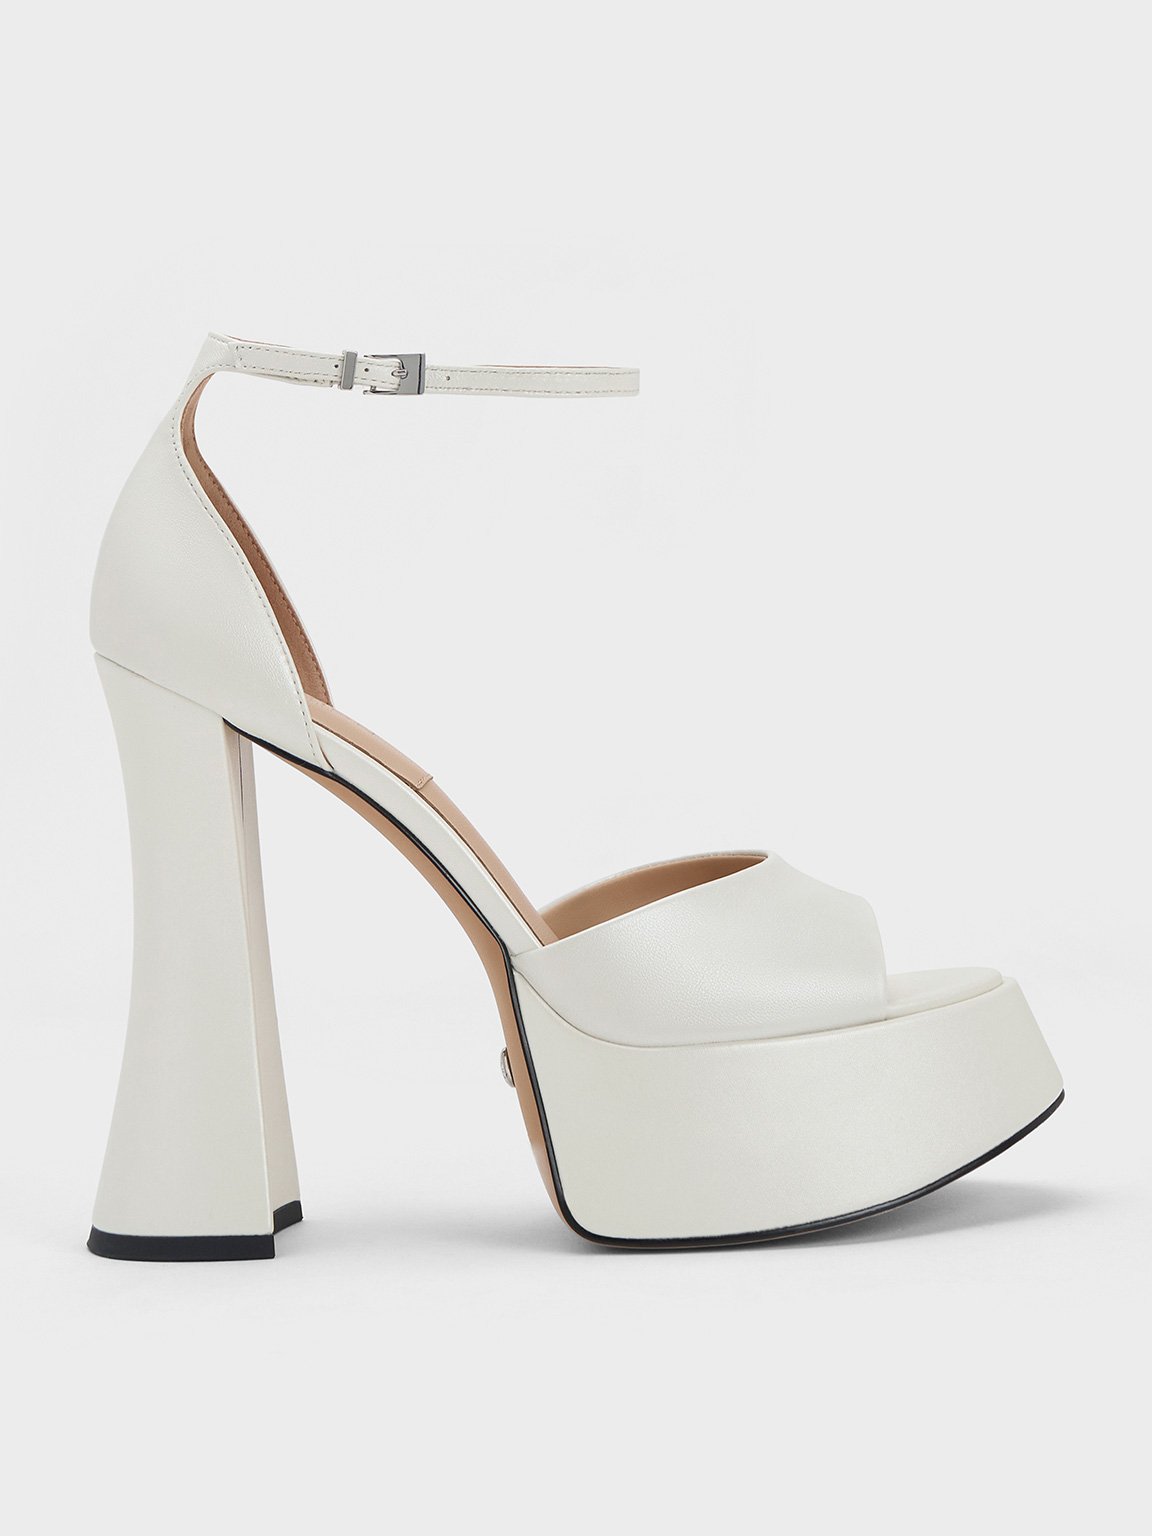 Retro Style White Platform Heels For Women & Girls